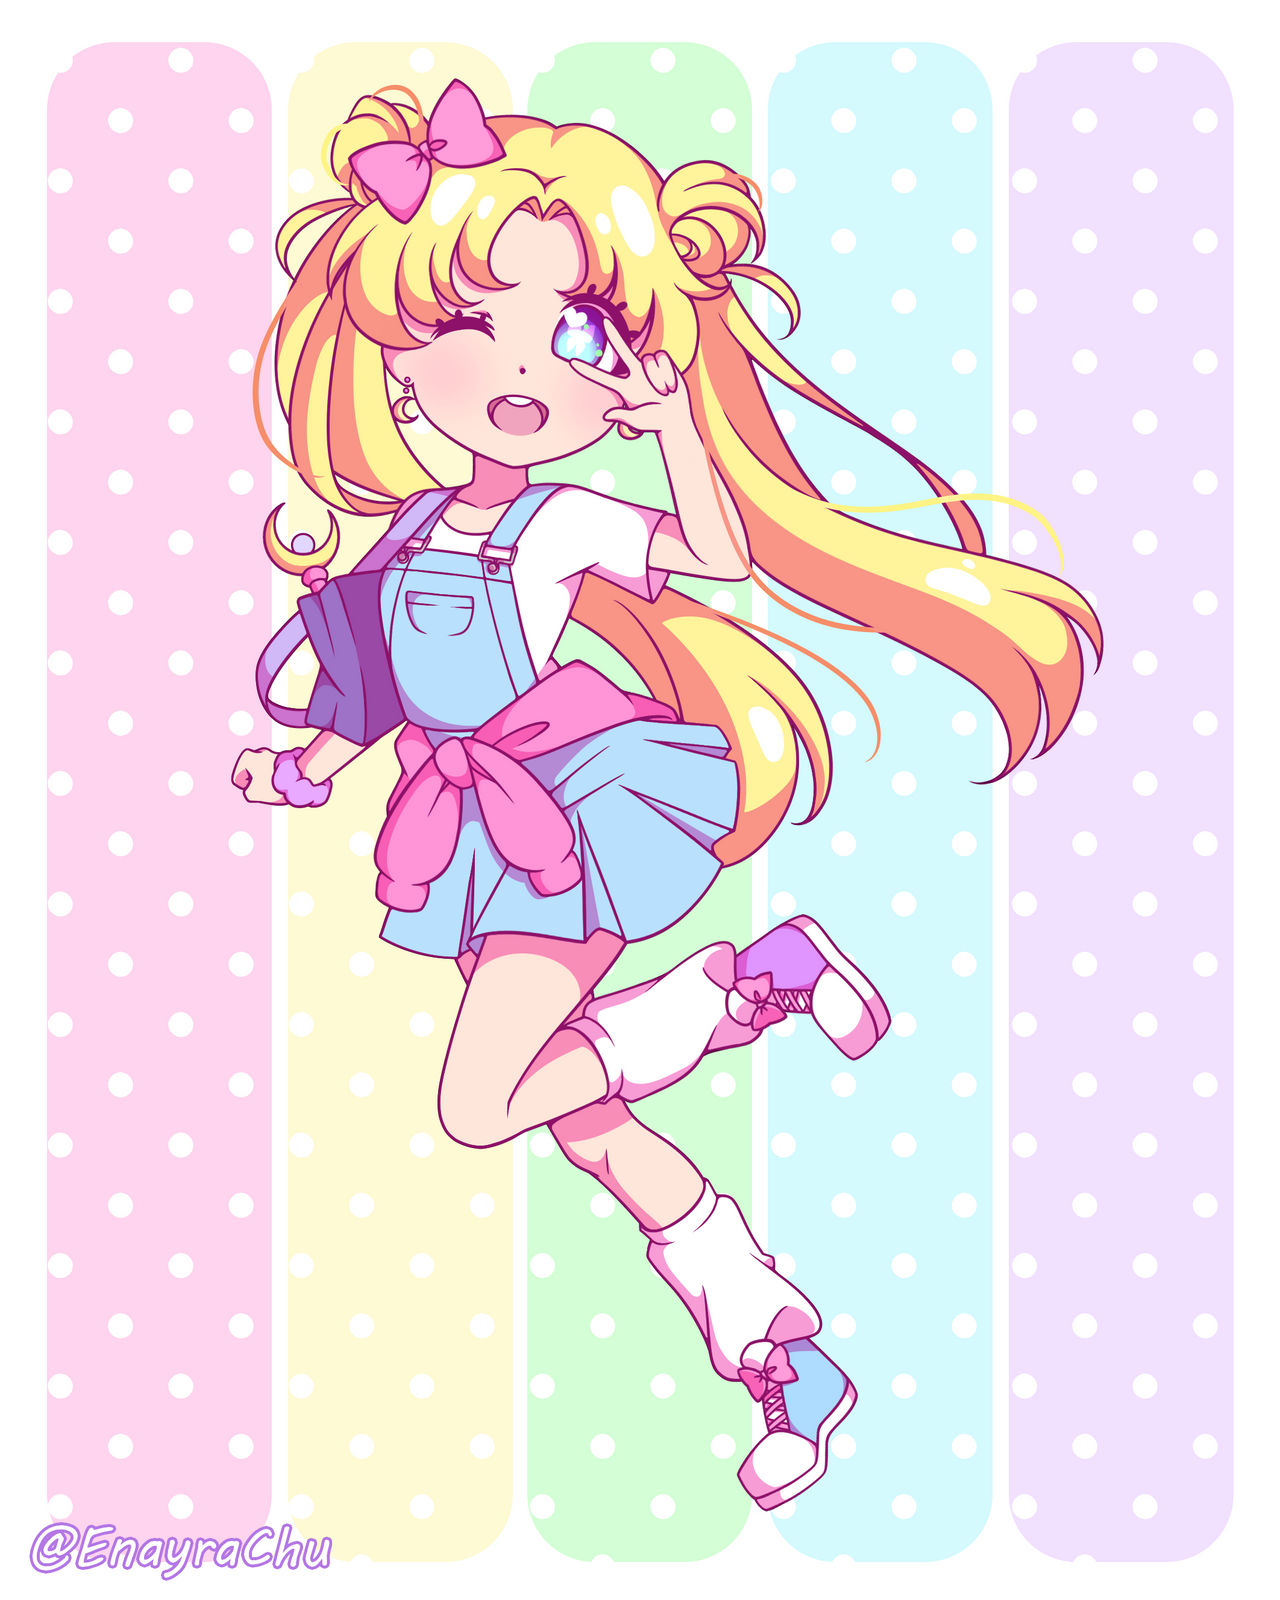 Sailor Moon [FANART] by EnayraChu on DeviantArt